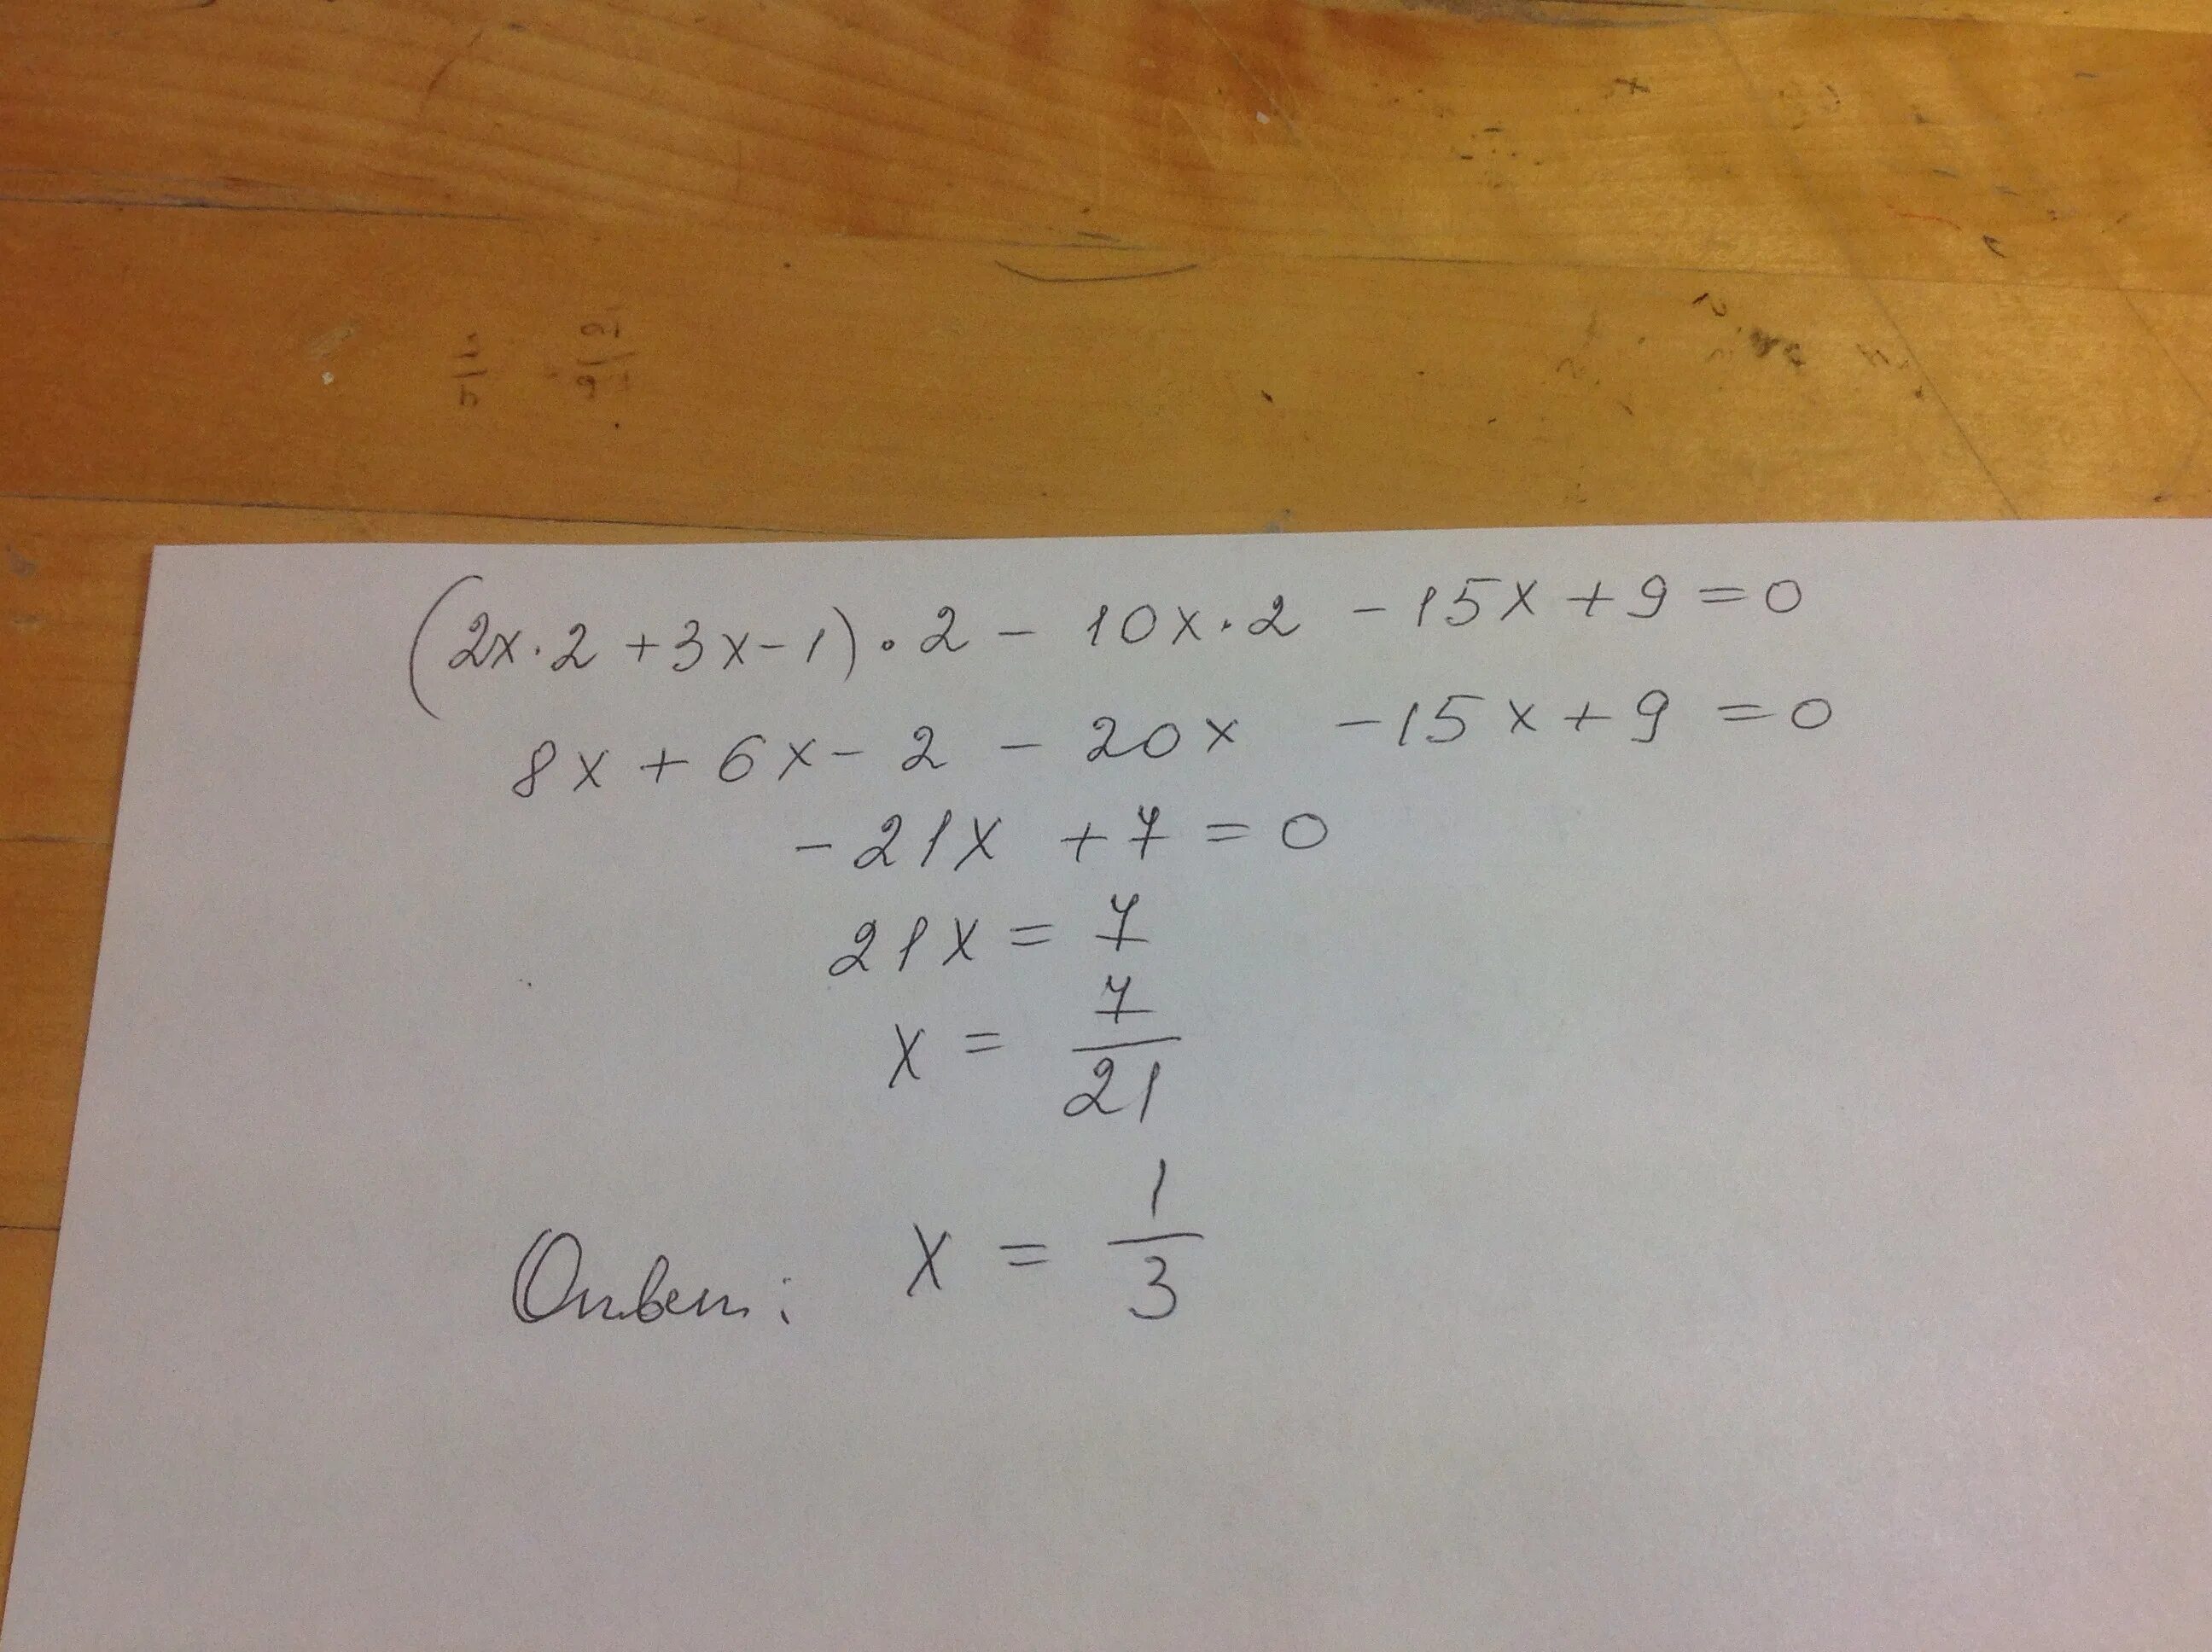 5x 9 3x 23. X3+2x2+2x+1. 10x 15 уравнение решении. 1/2x2-10. (X - 15) + (3x - 7) = 2(x−15)+(3x−7)=2.